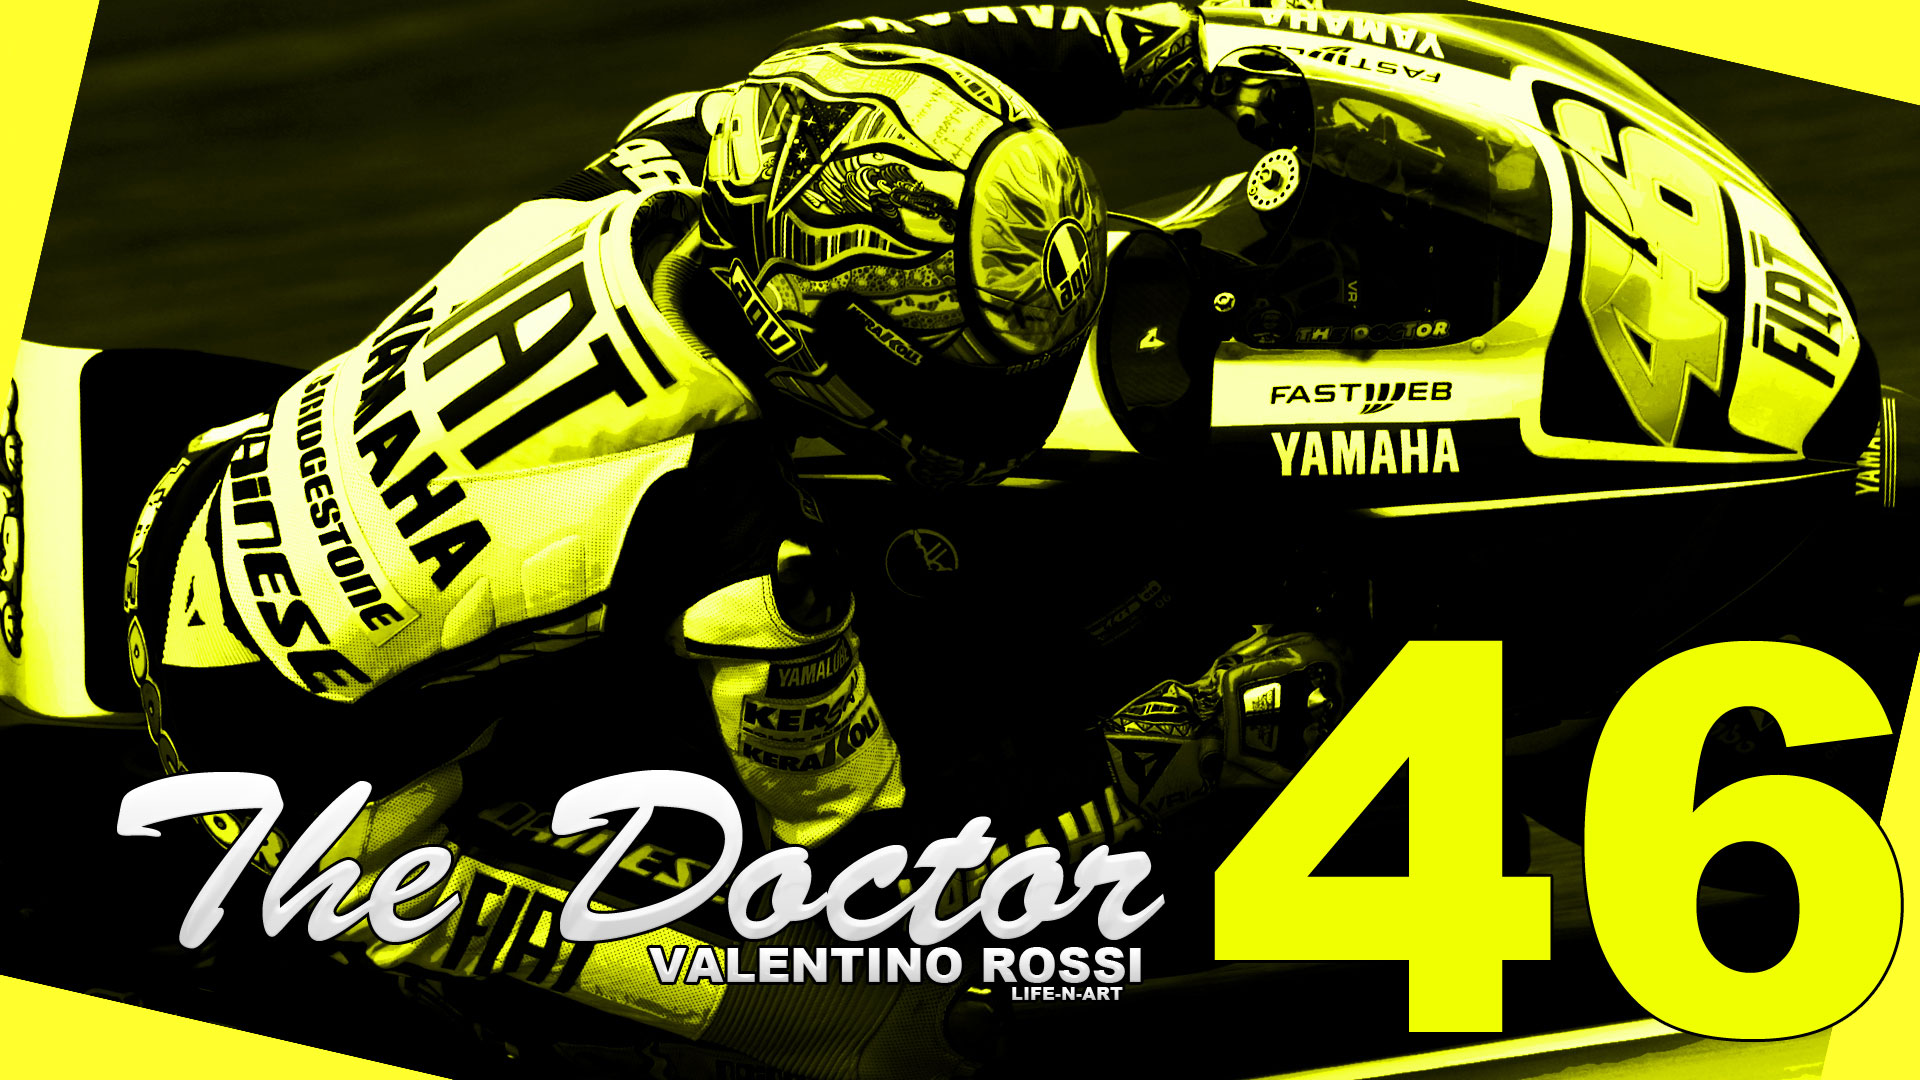 Wallpaperres.com | Valentino Rossi The Doctor Wallpaper 03